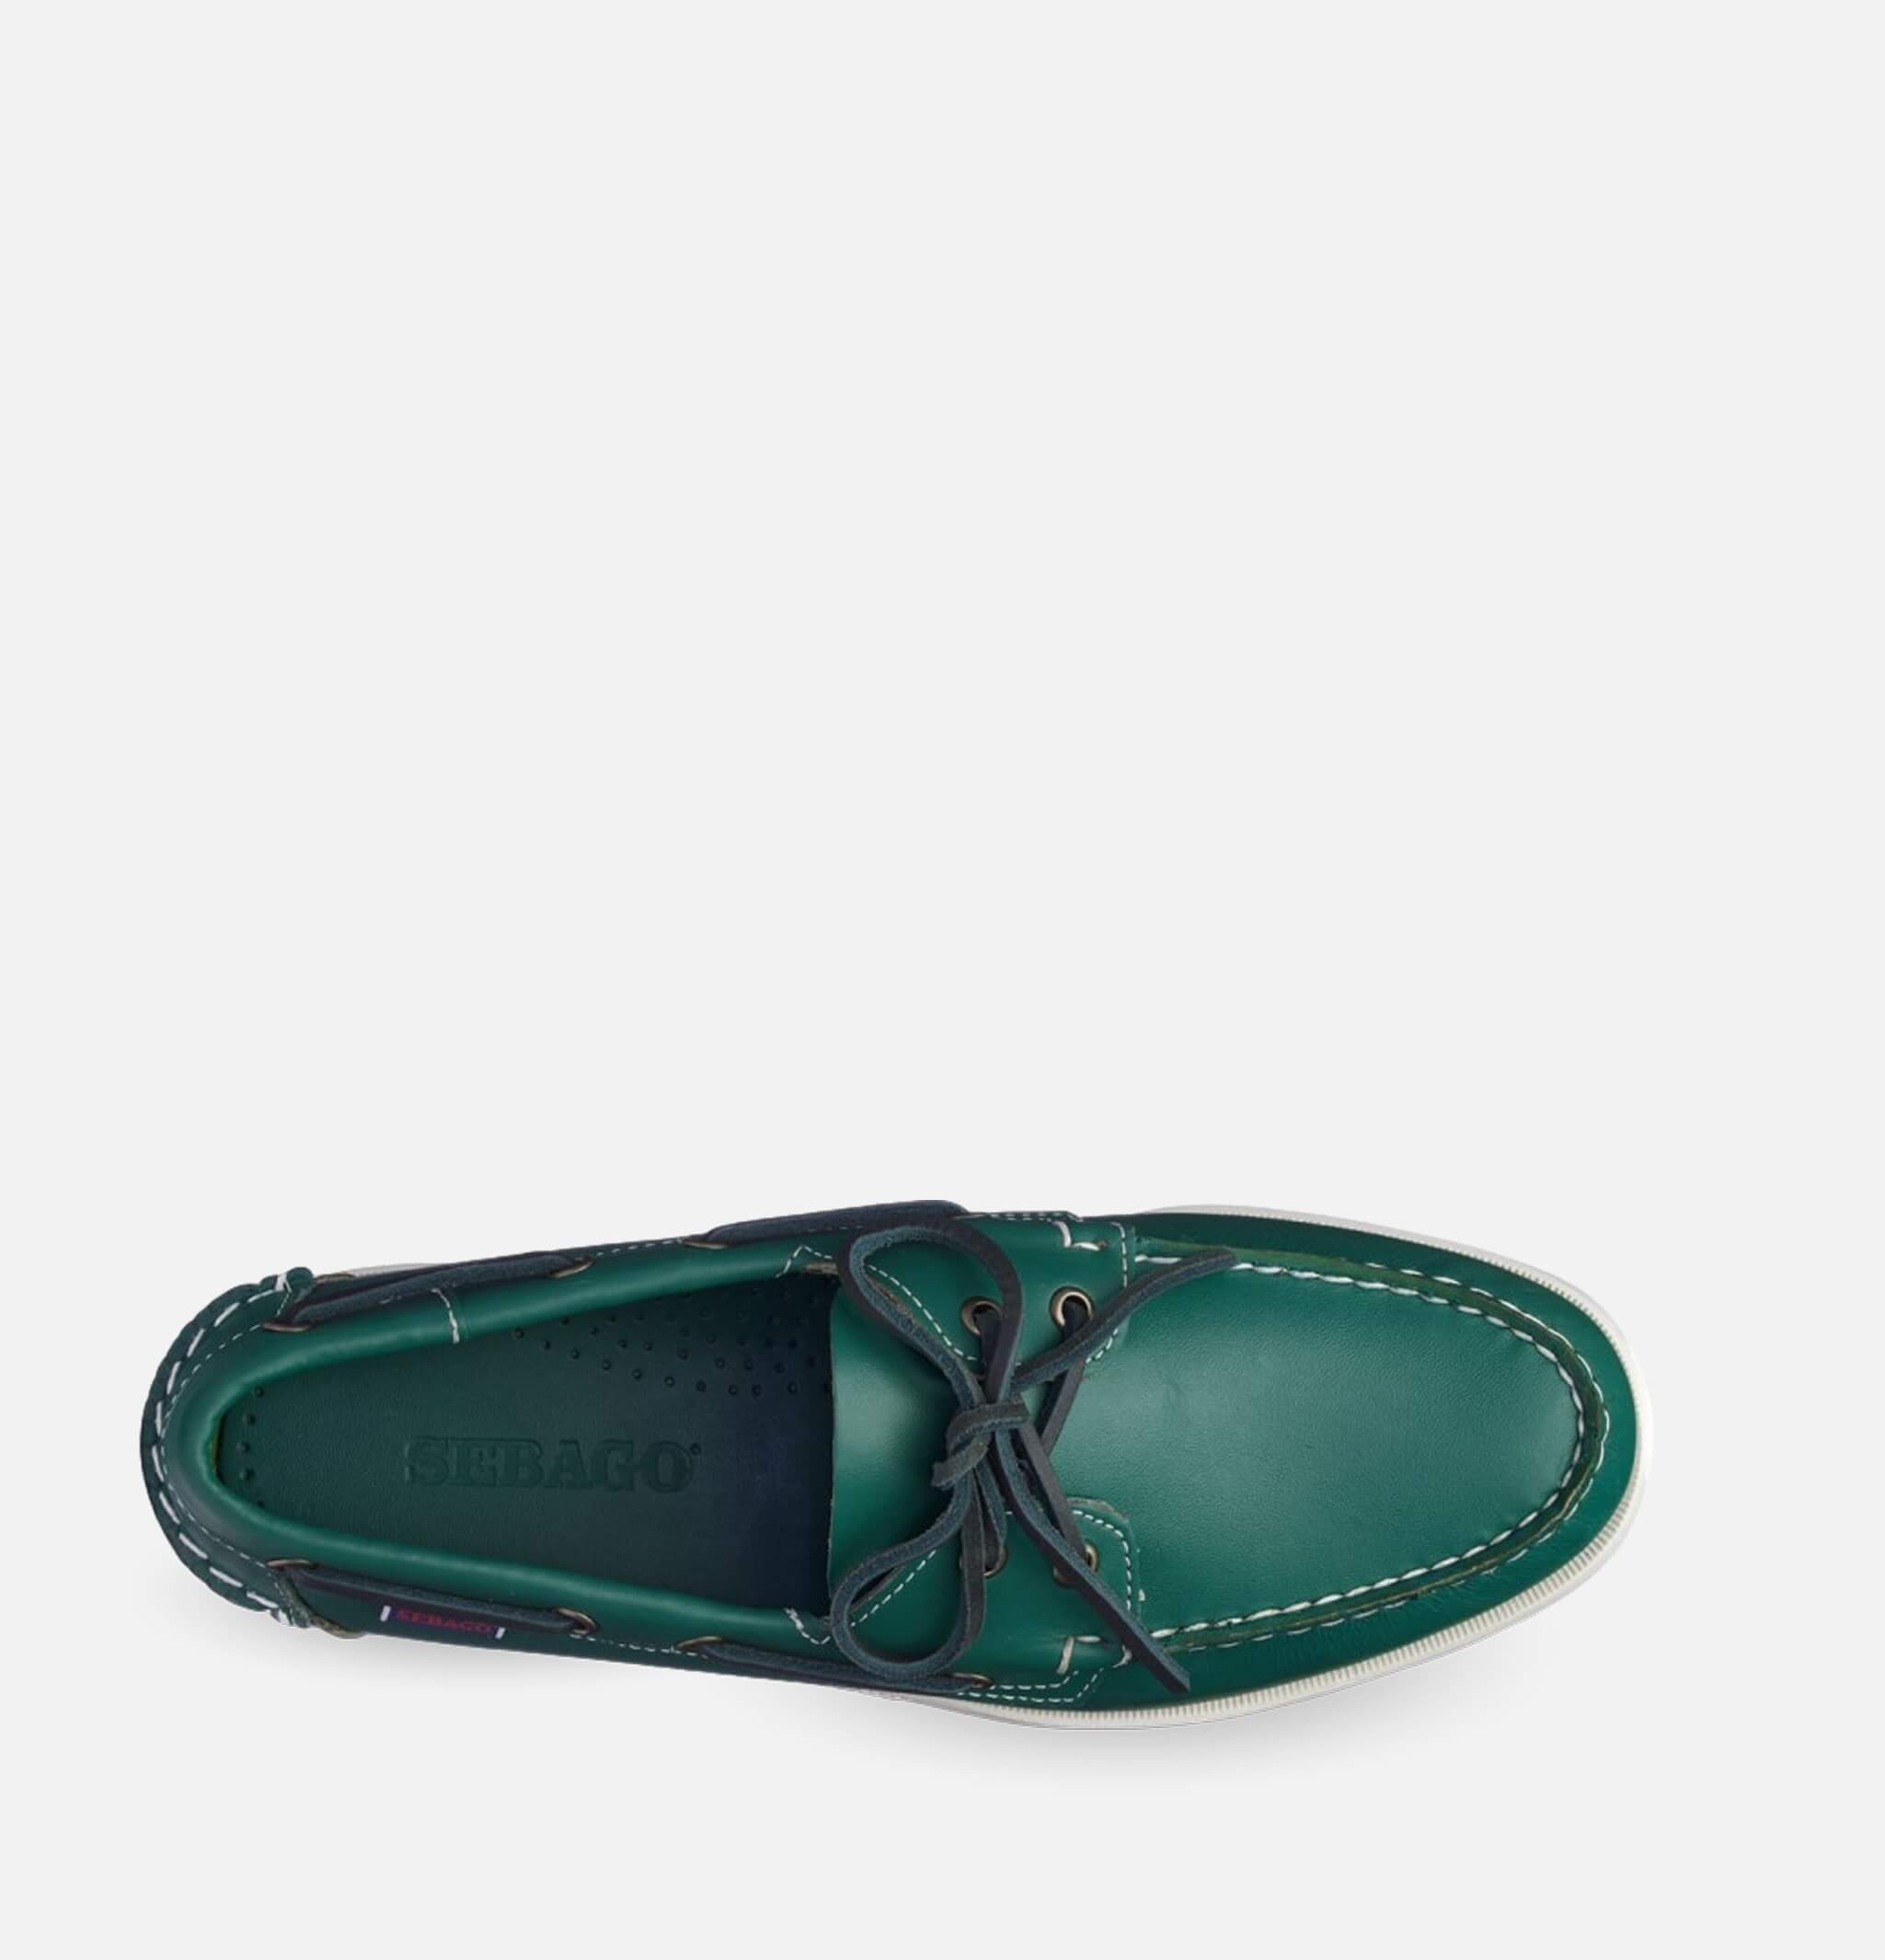 Chaussures Sebago Docksides Vert